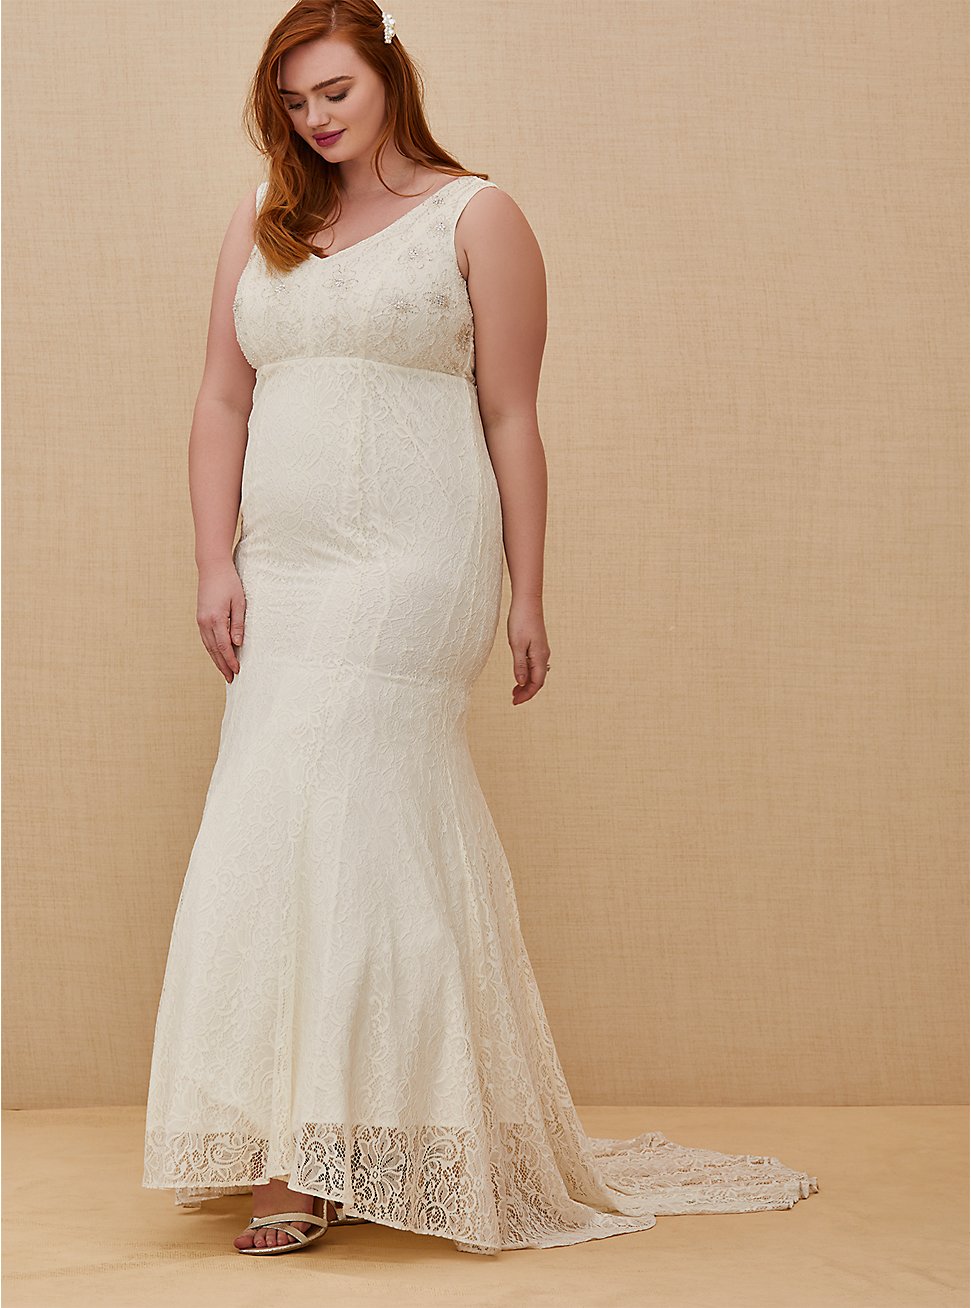 Ivory Lace Beaded Sleeveless Mermaid Wedding Dress, CLOUD DANCER, hi-res